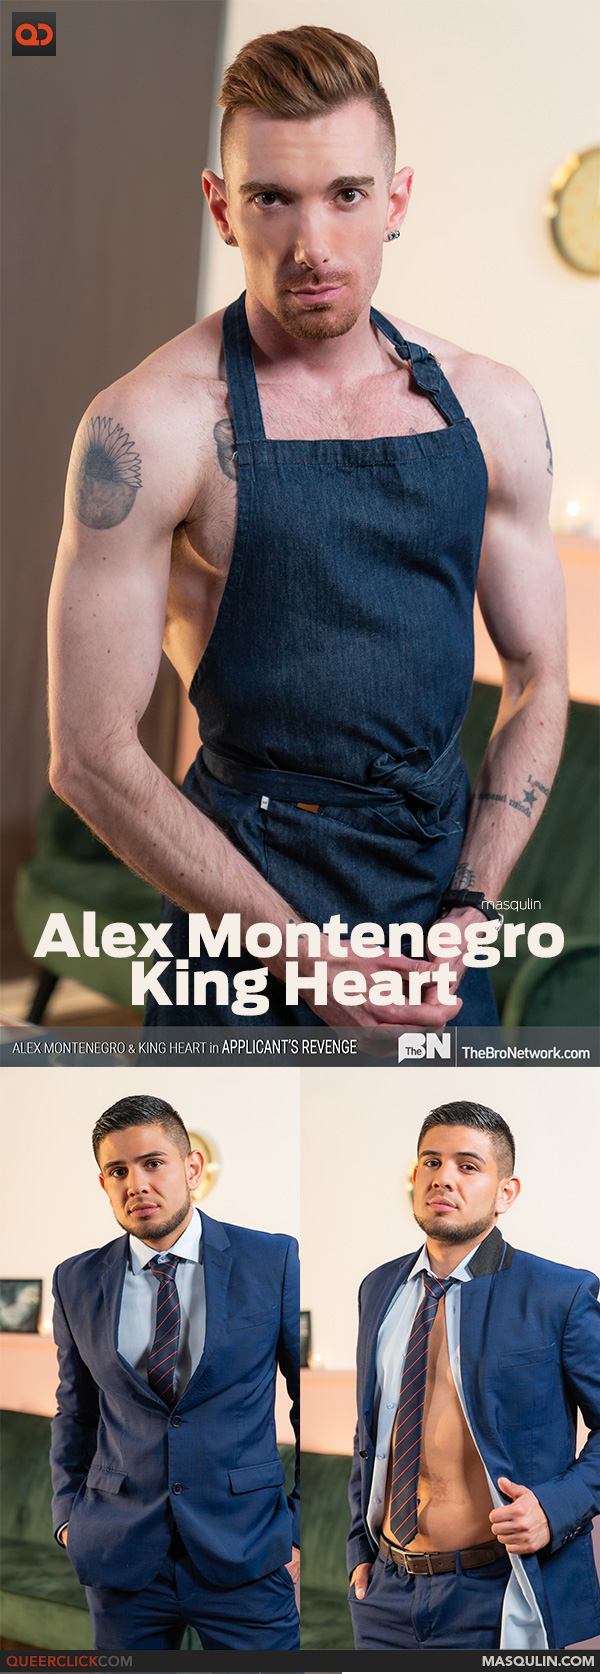 The Bro Network | Masqulin: Alex Montenegro and King Heart